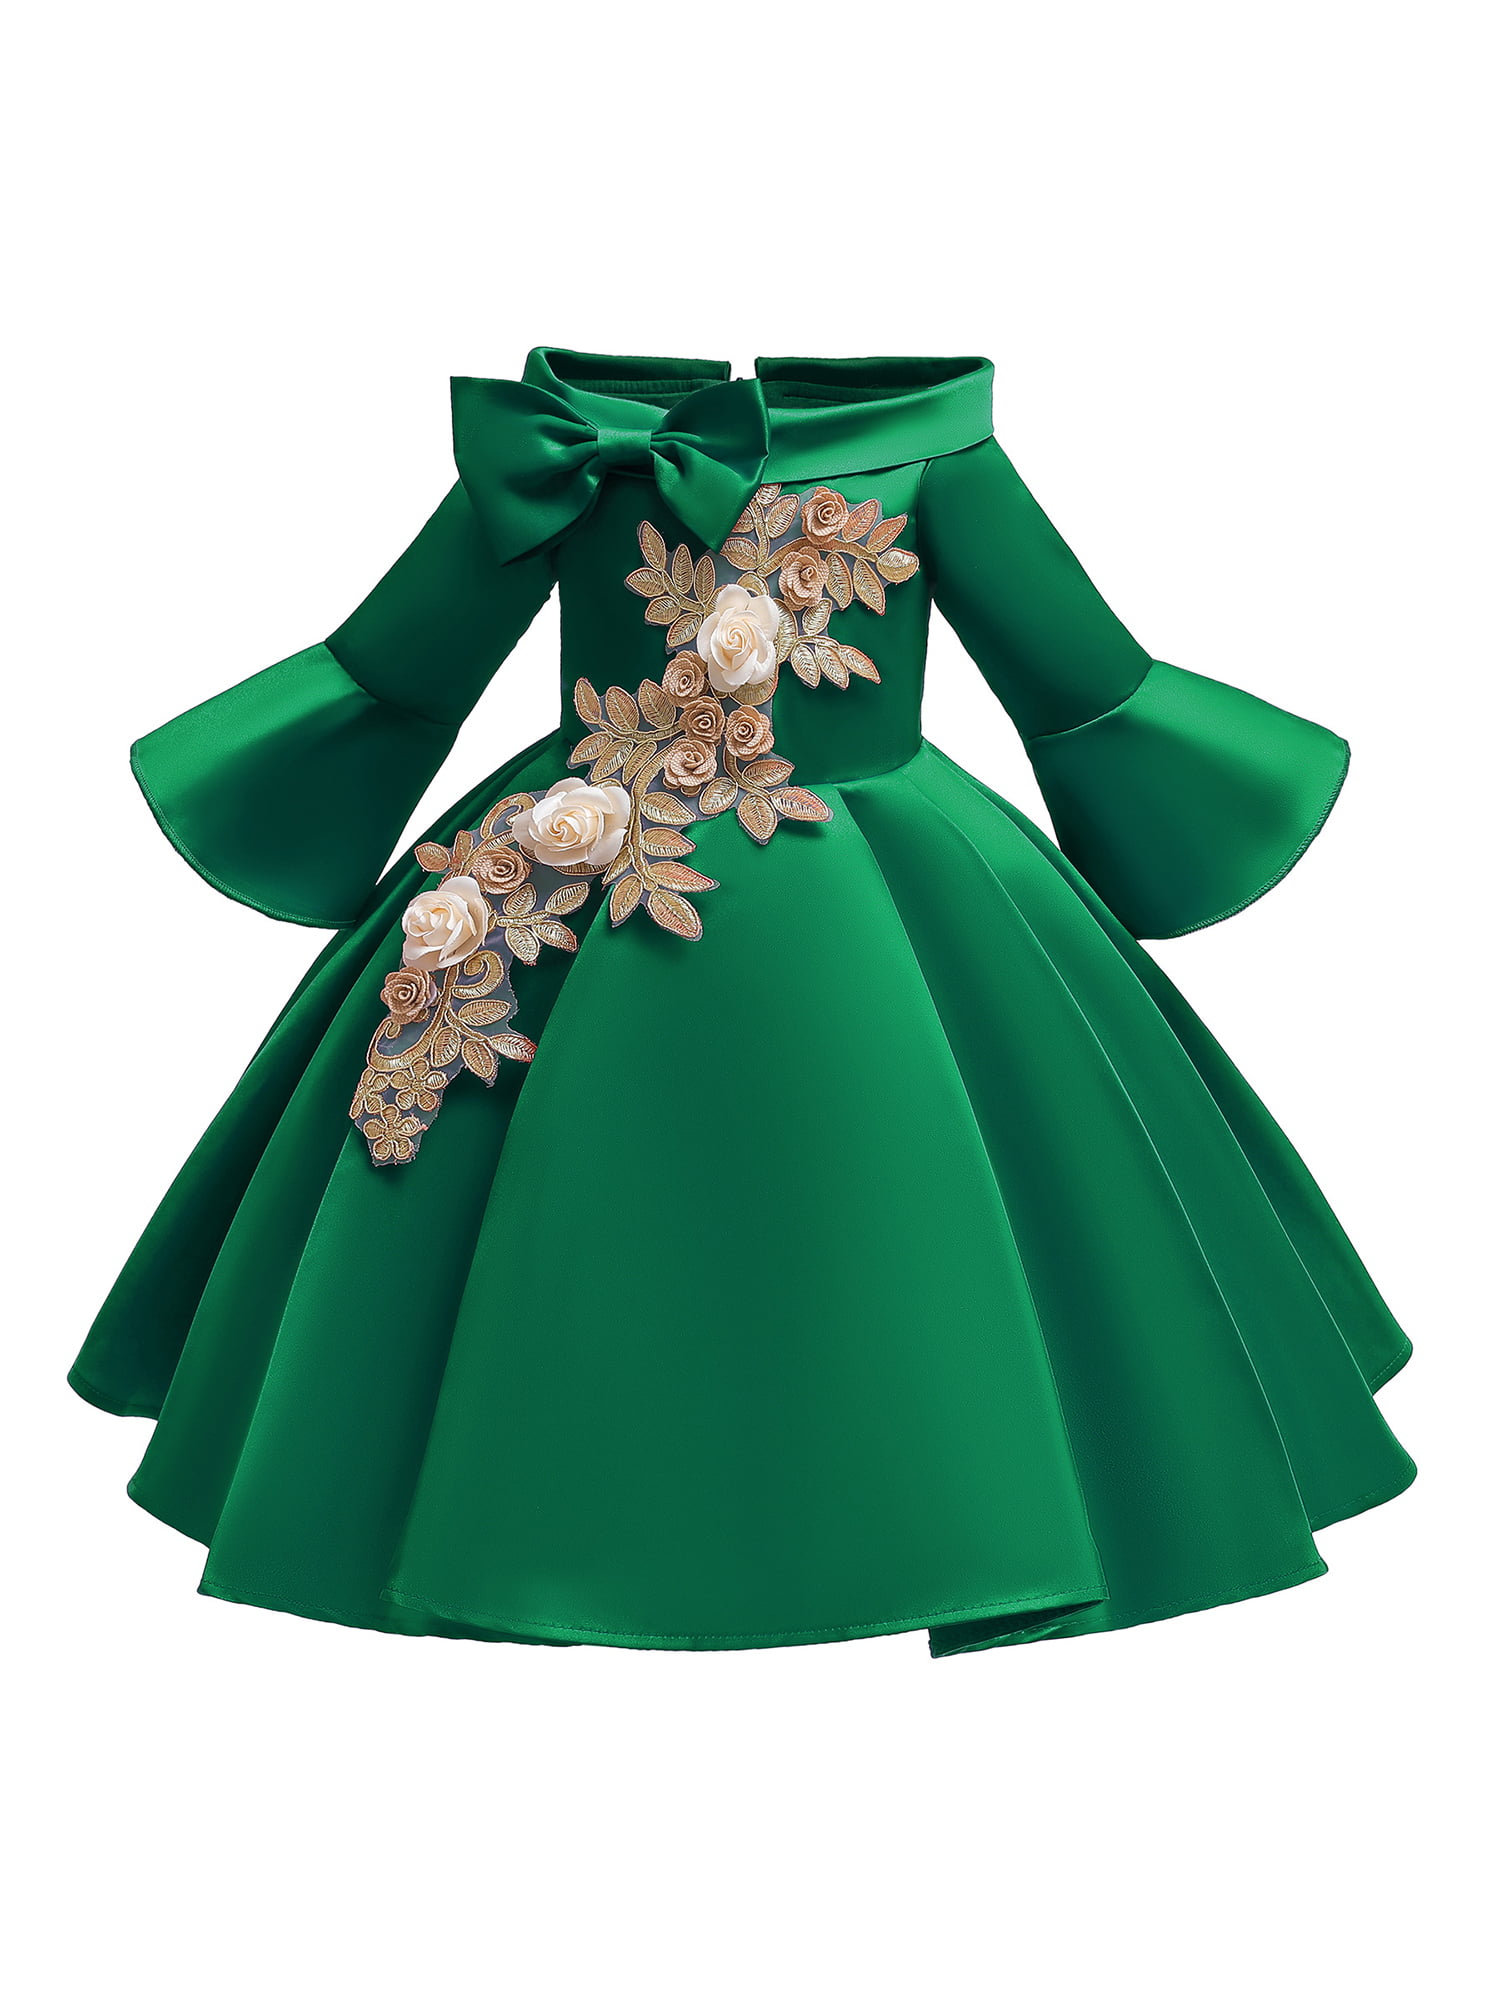 Girls Large Floral Print Green Embellished Summer Cotton Dresses 2-10 years 